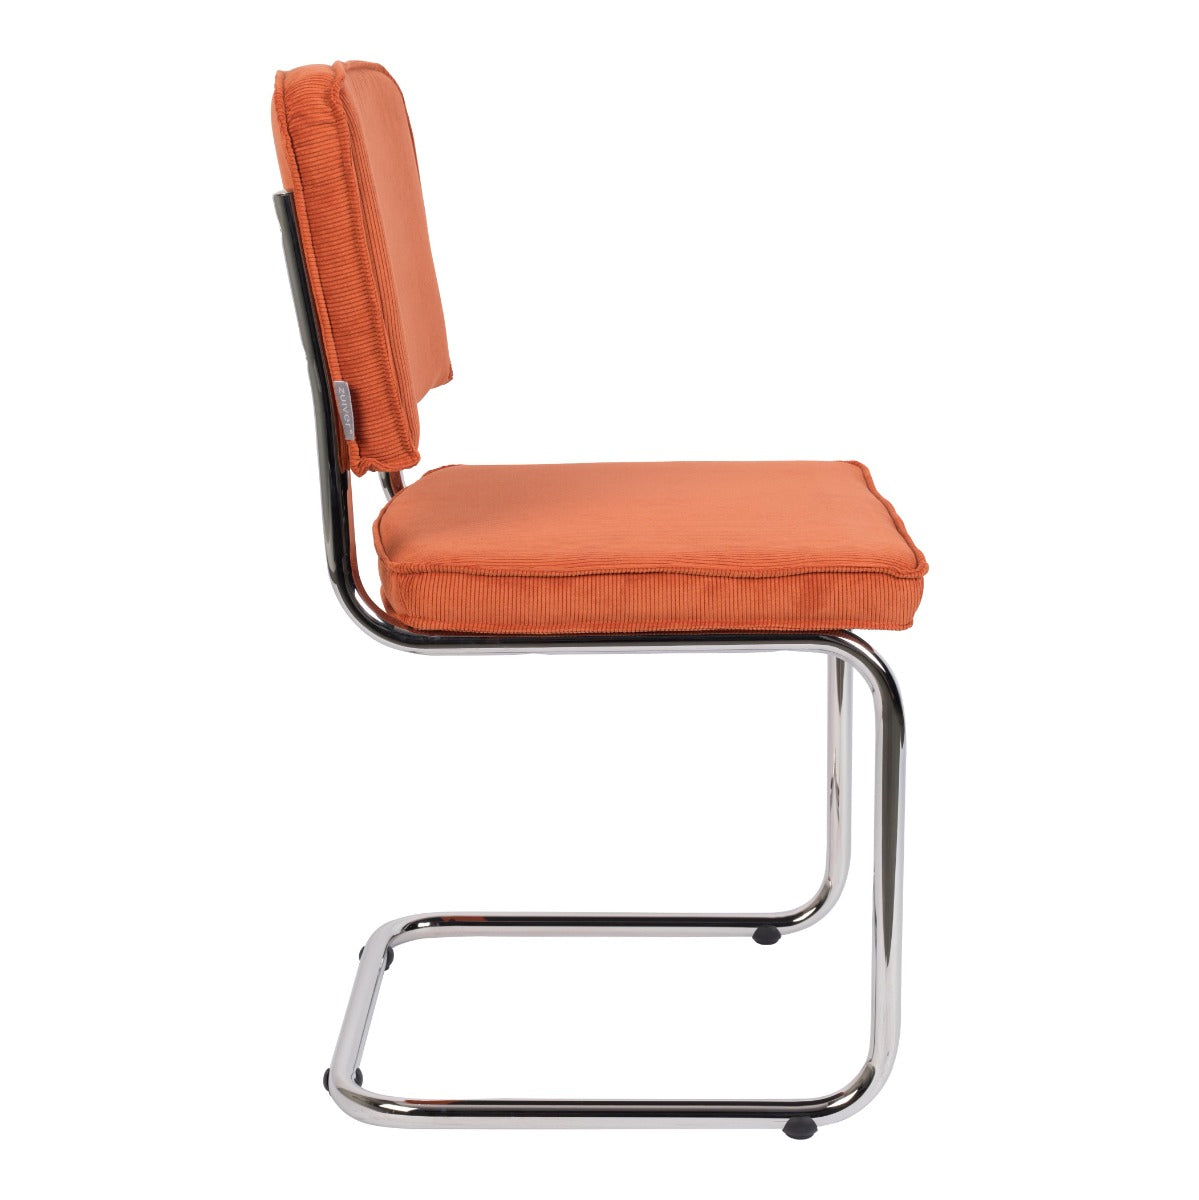 RIDGE RIB chair orange, Zuiver, Eye on Design